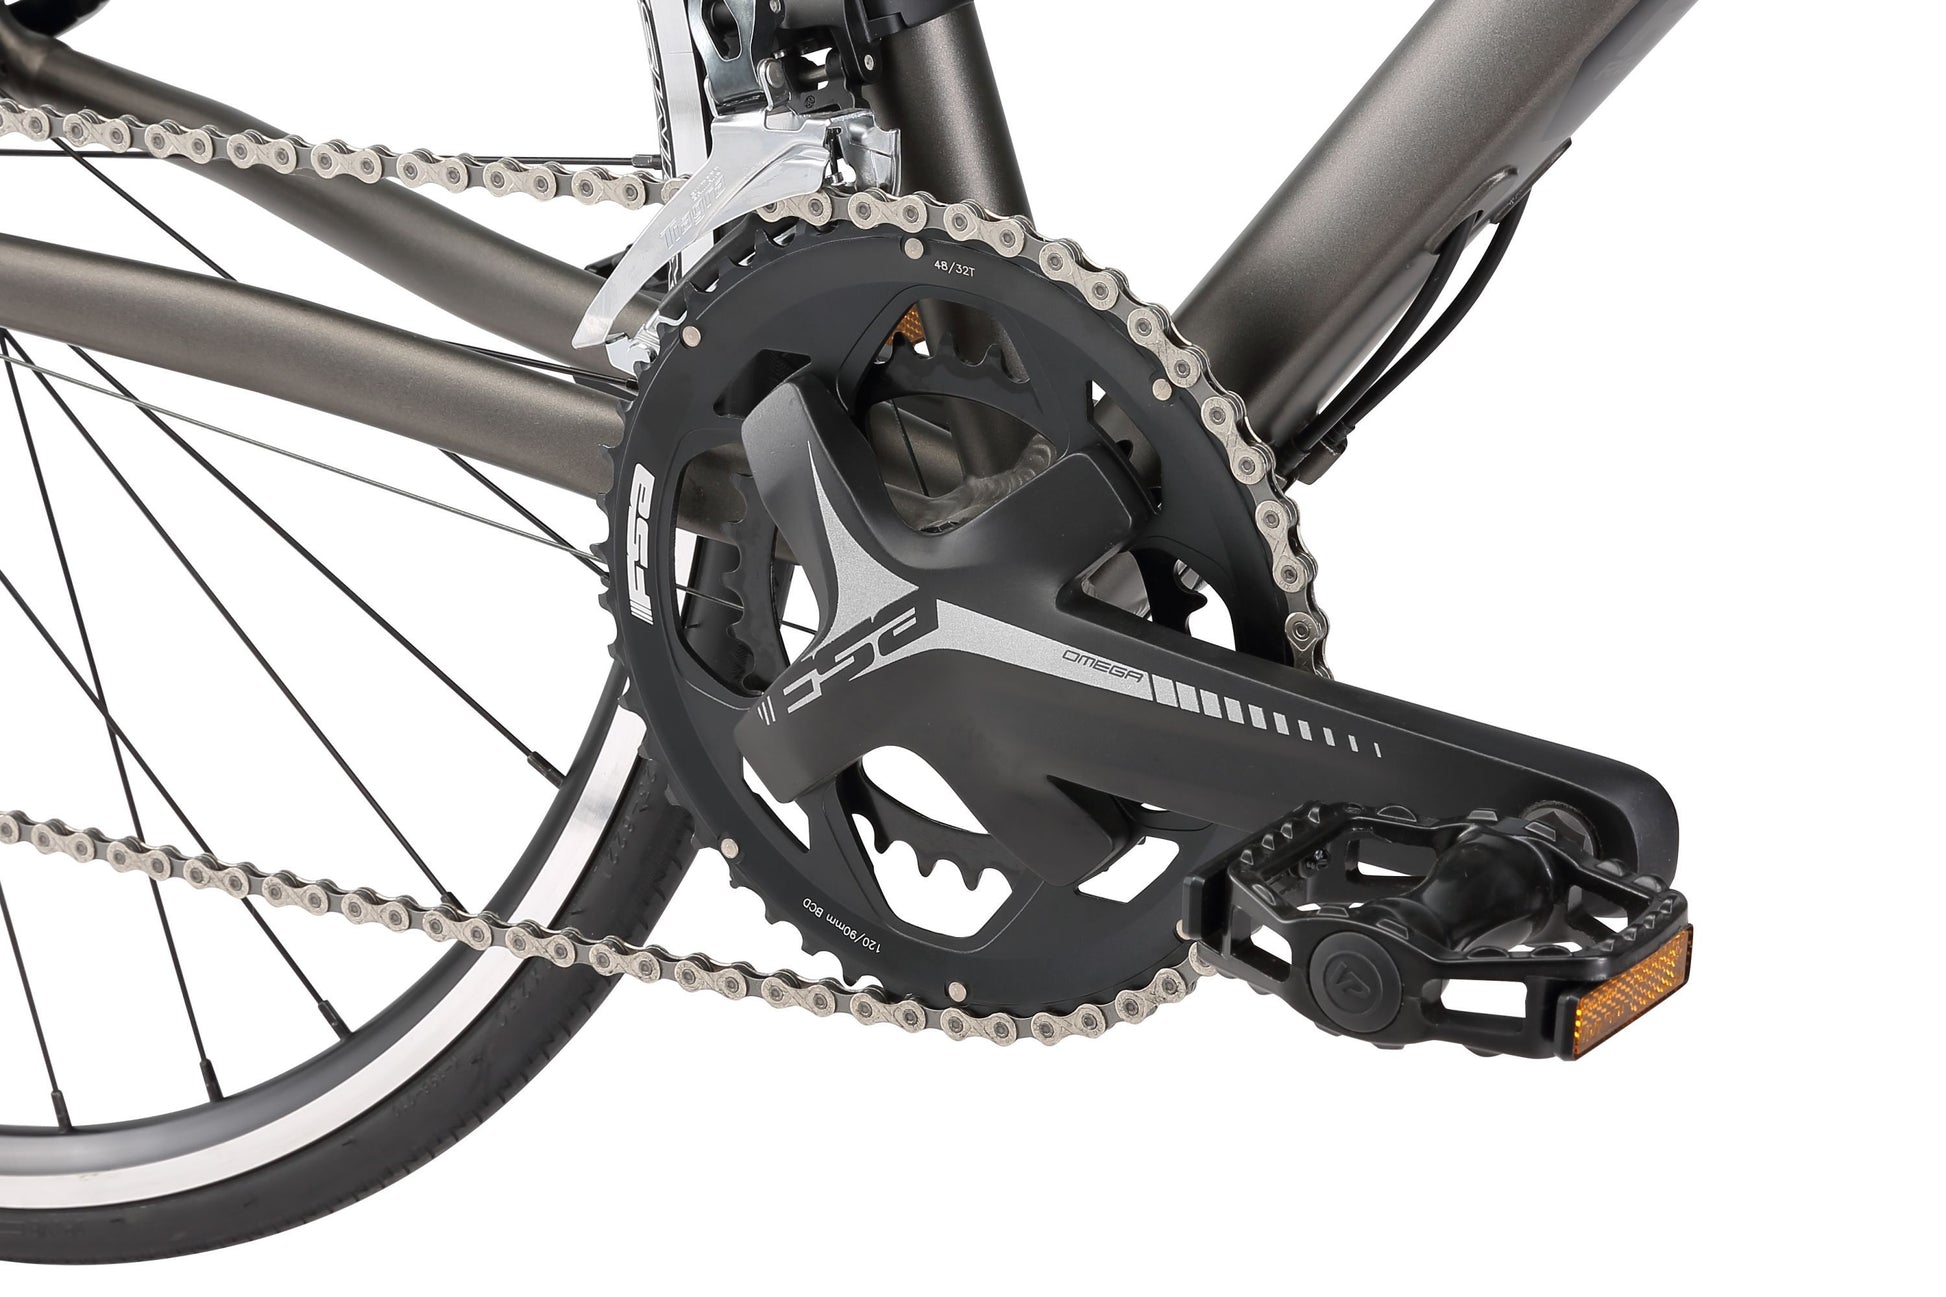 Falco Sport Road Bike in Charcoal showing FSA Omega drivetrain and pedal from Reid Cycles Australia